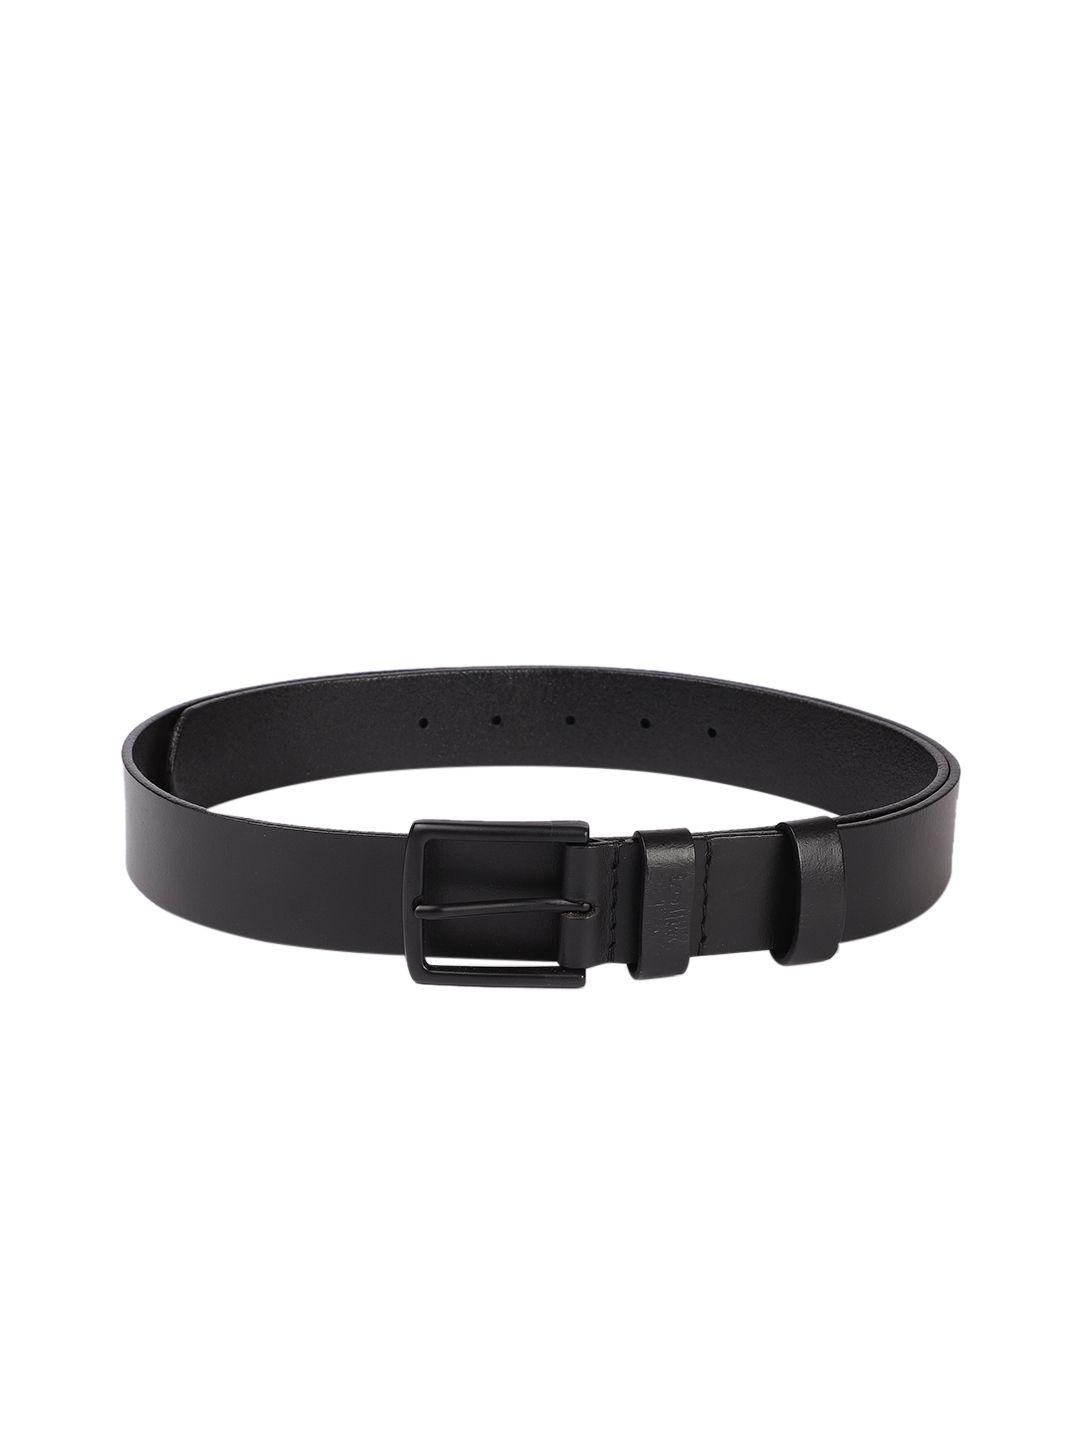 levis-men-black-leather-belt